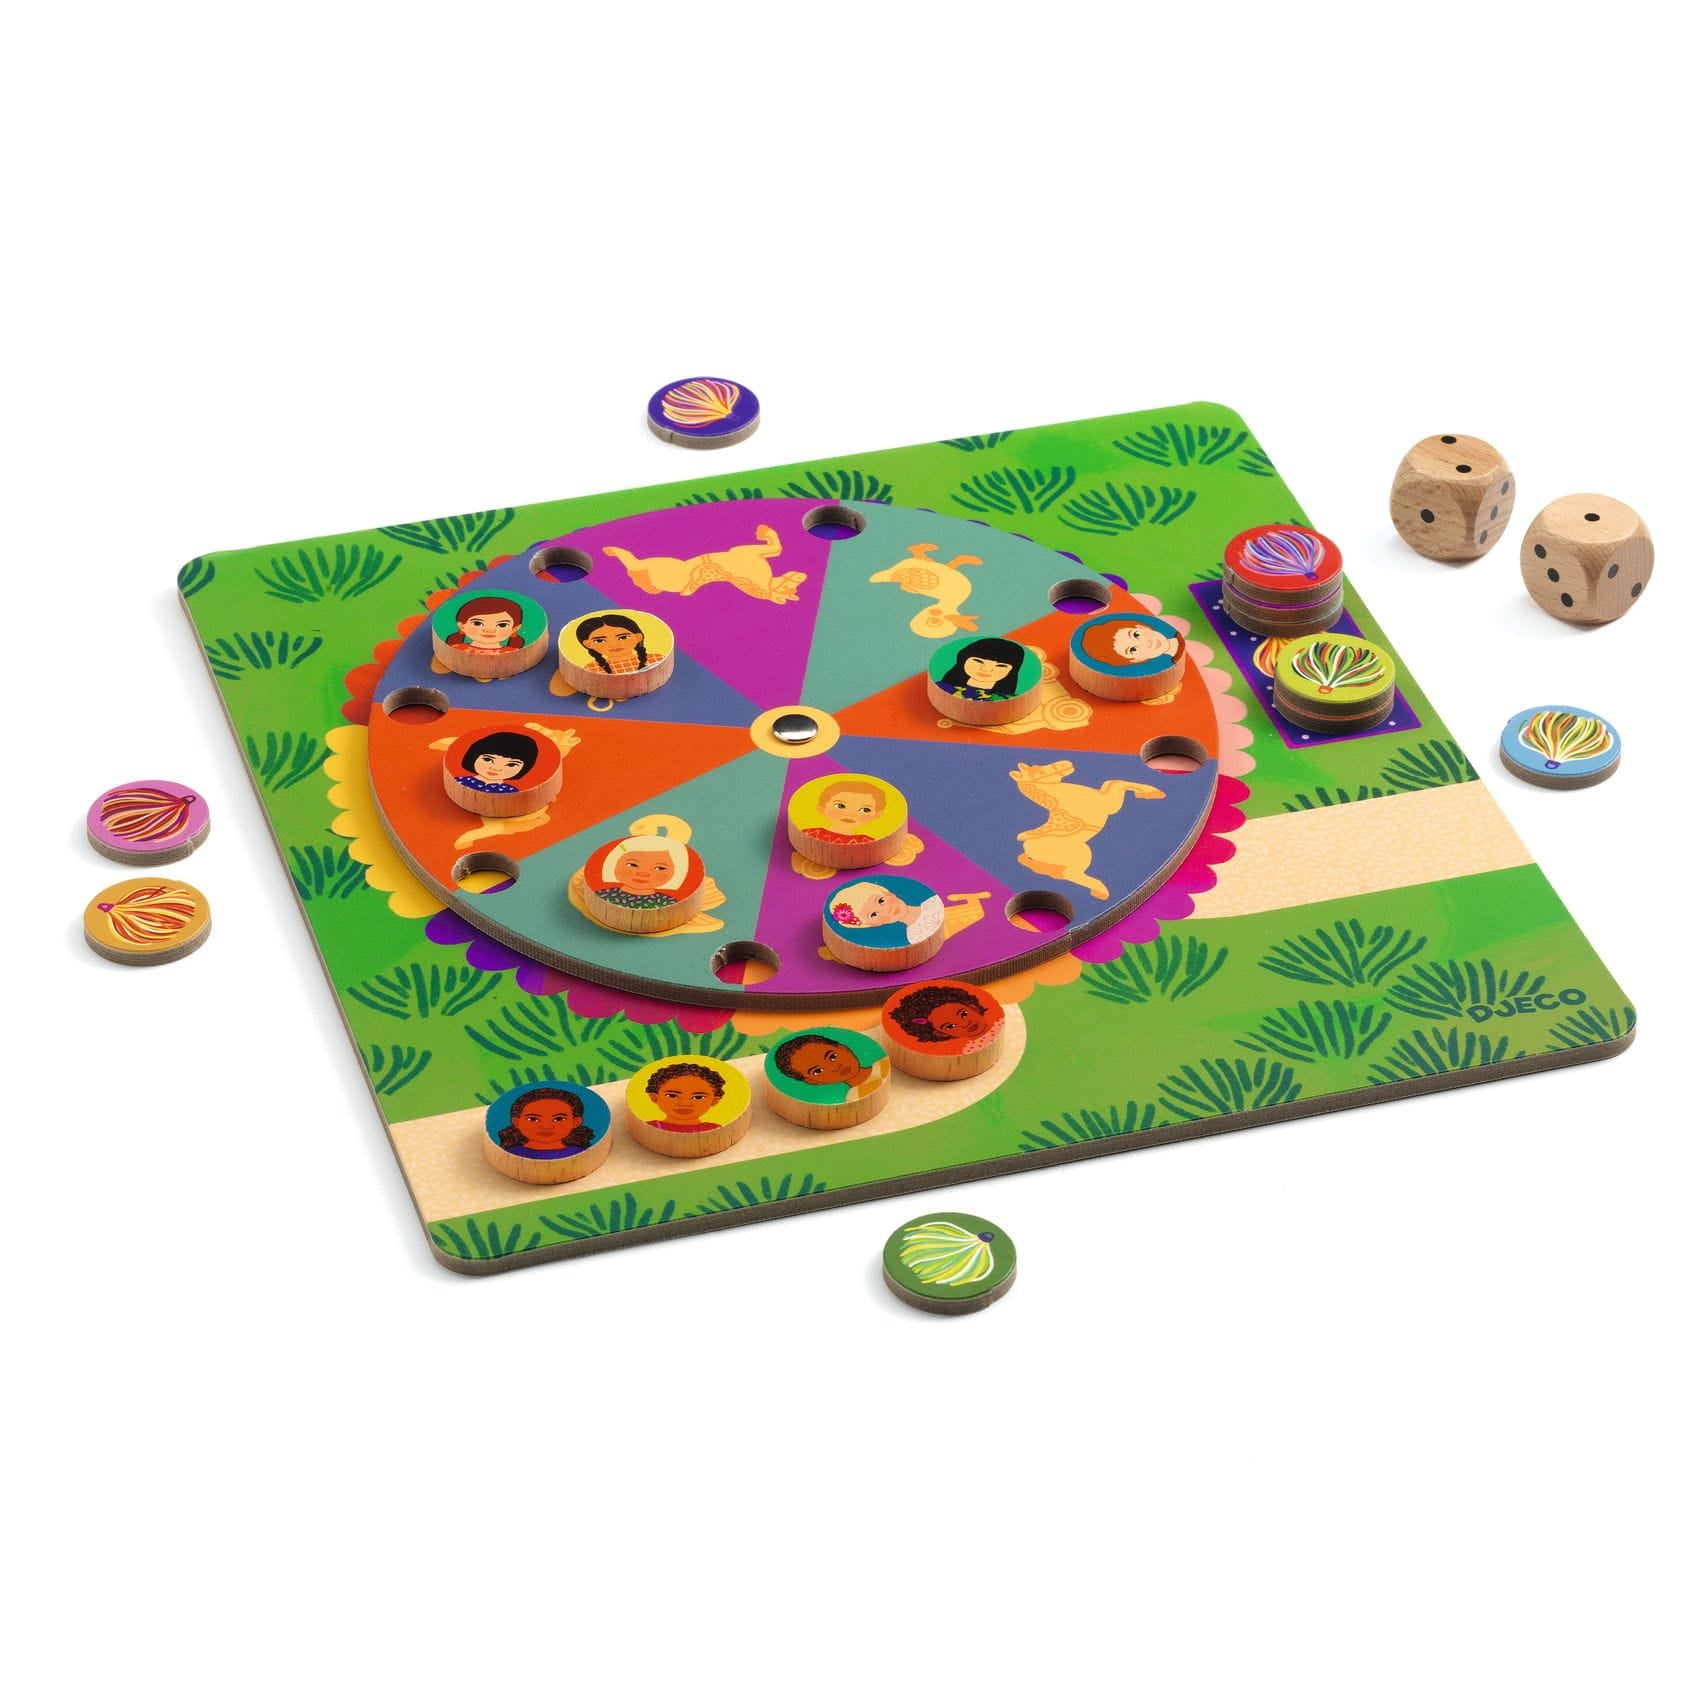 Djeco: Pompon board game